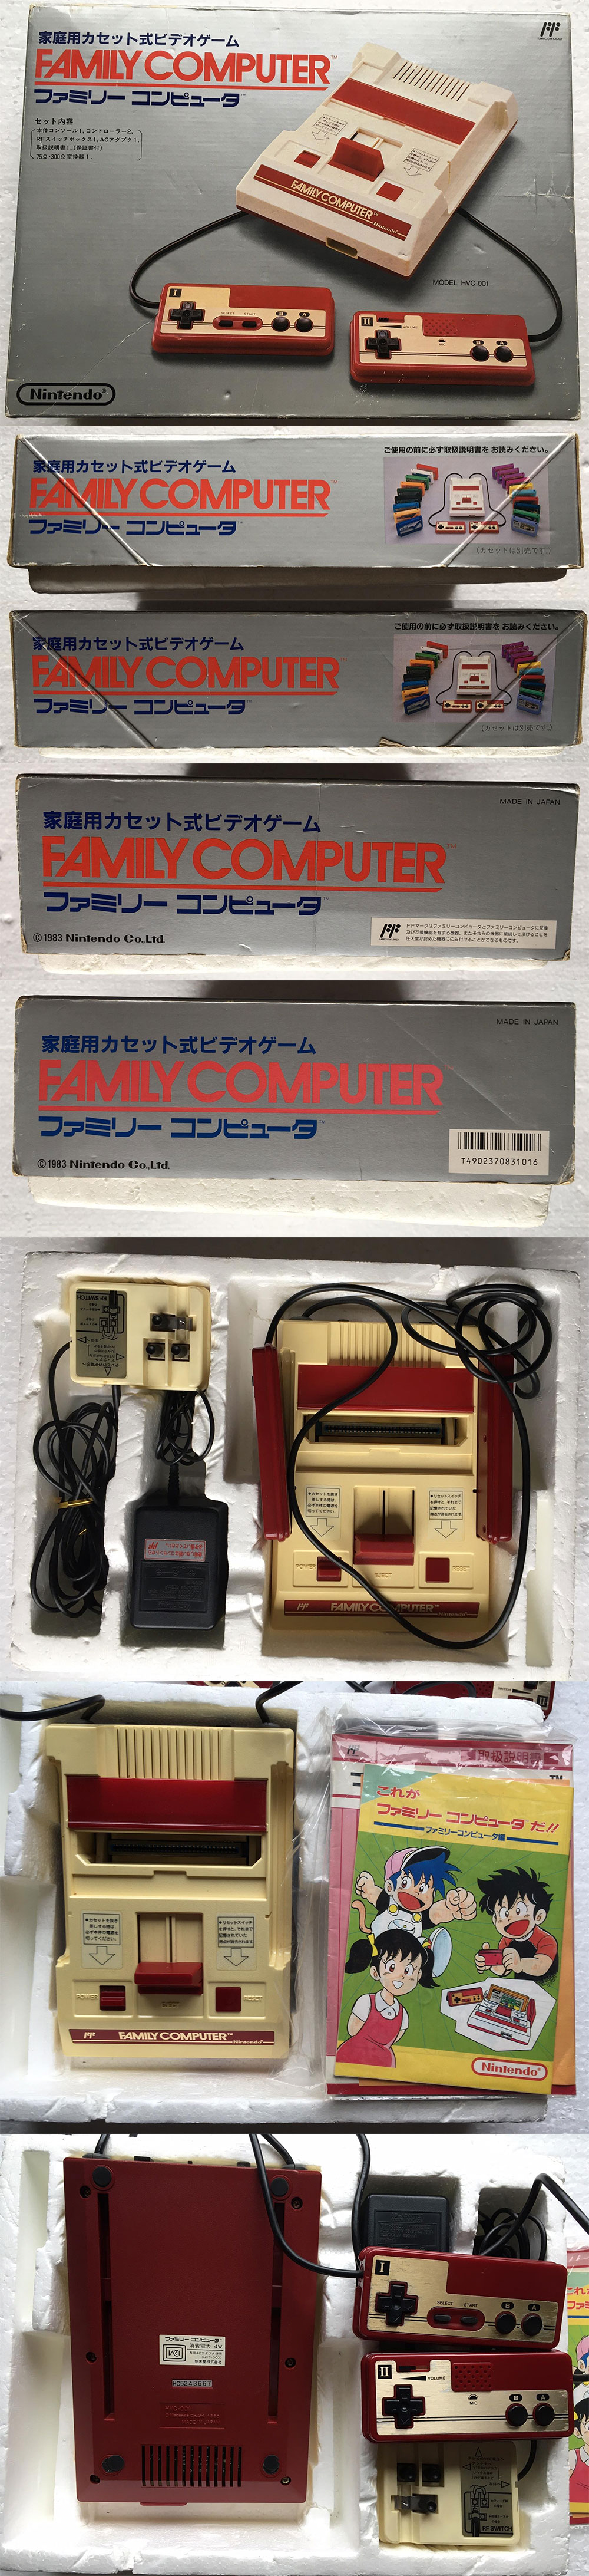 Japanese Famicom HVC001 Model from Nintendo - Nintendo Hardware